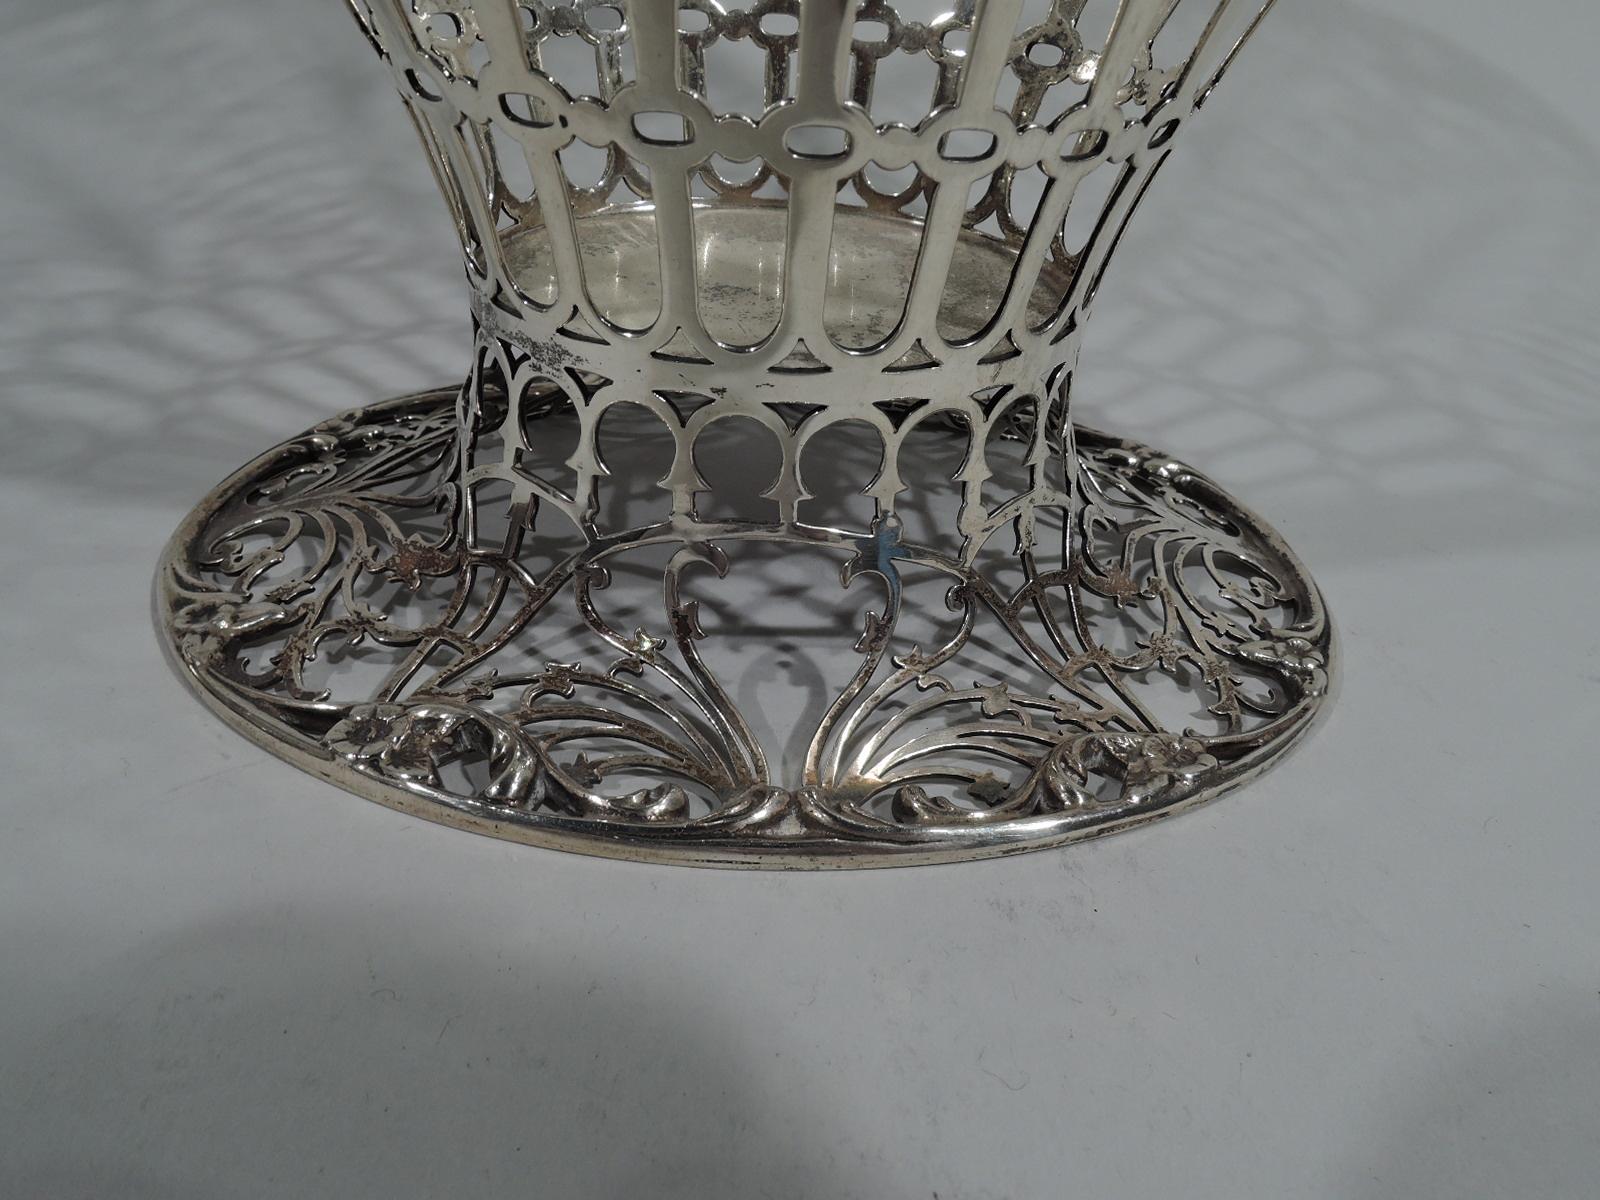 Fancy Antique American Sterling Silver Basket by Howard of New York 1